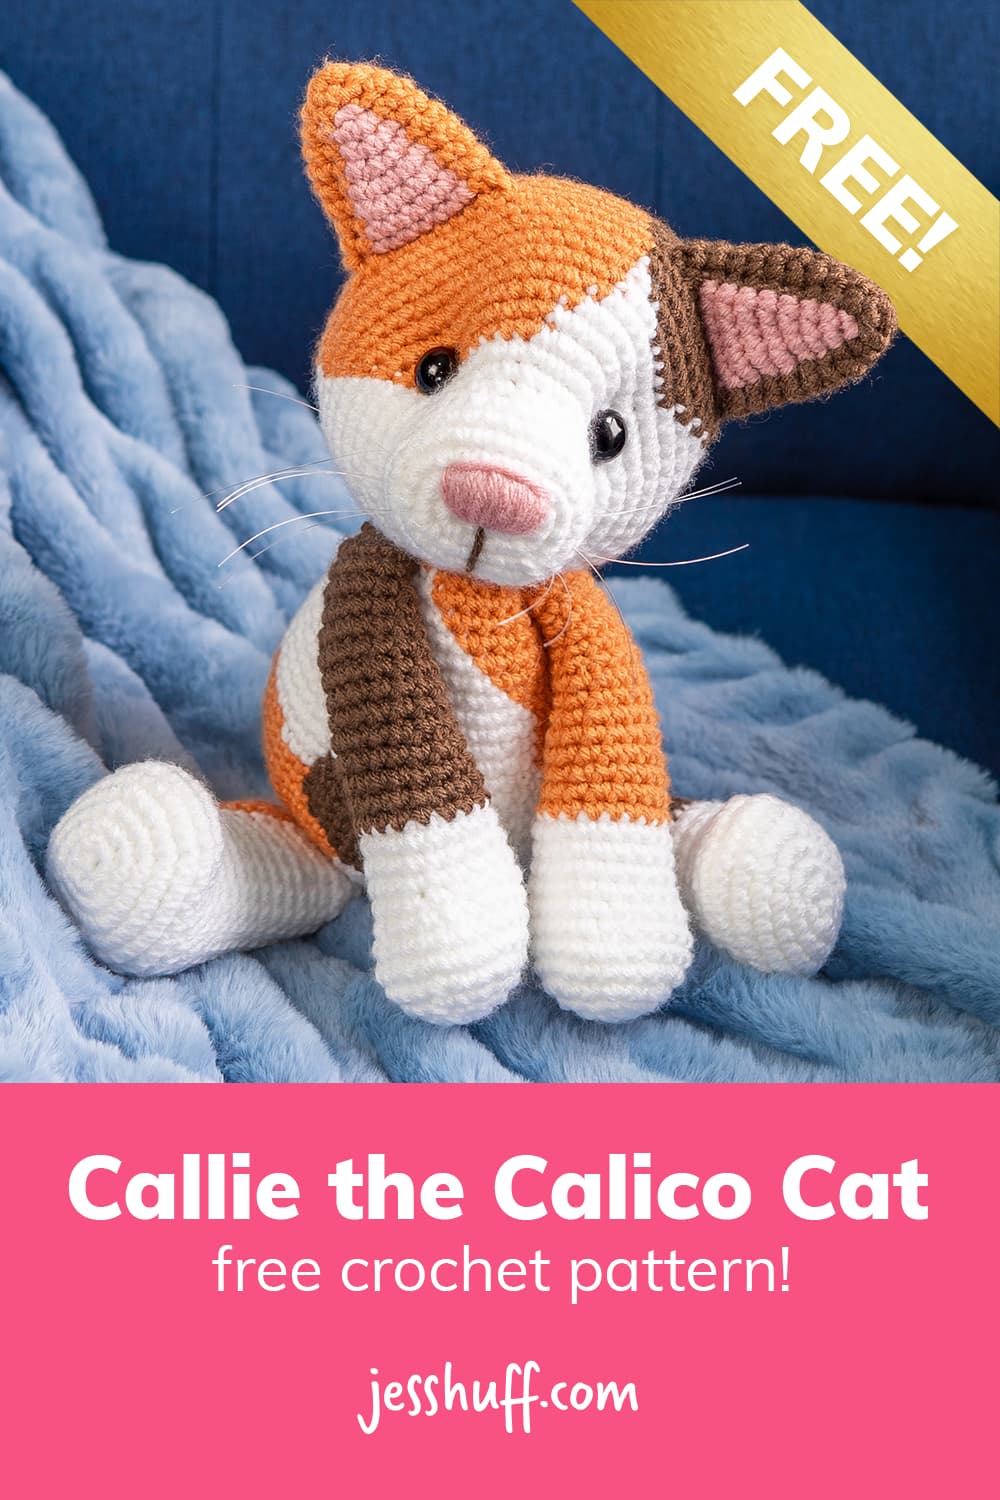 Free amigurumi crochet pattern for Callie the Calico Cat. via @heyjesshuff